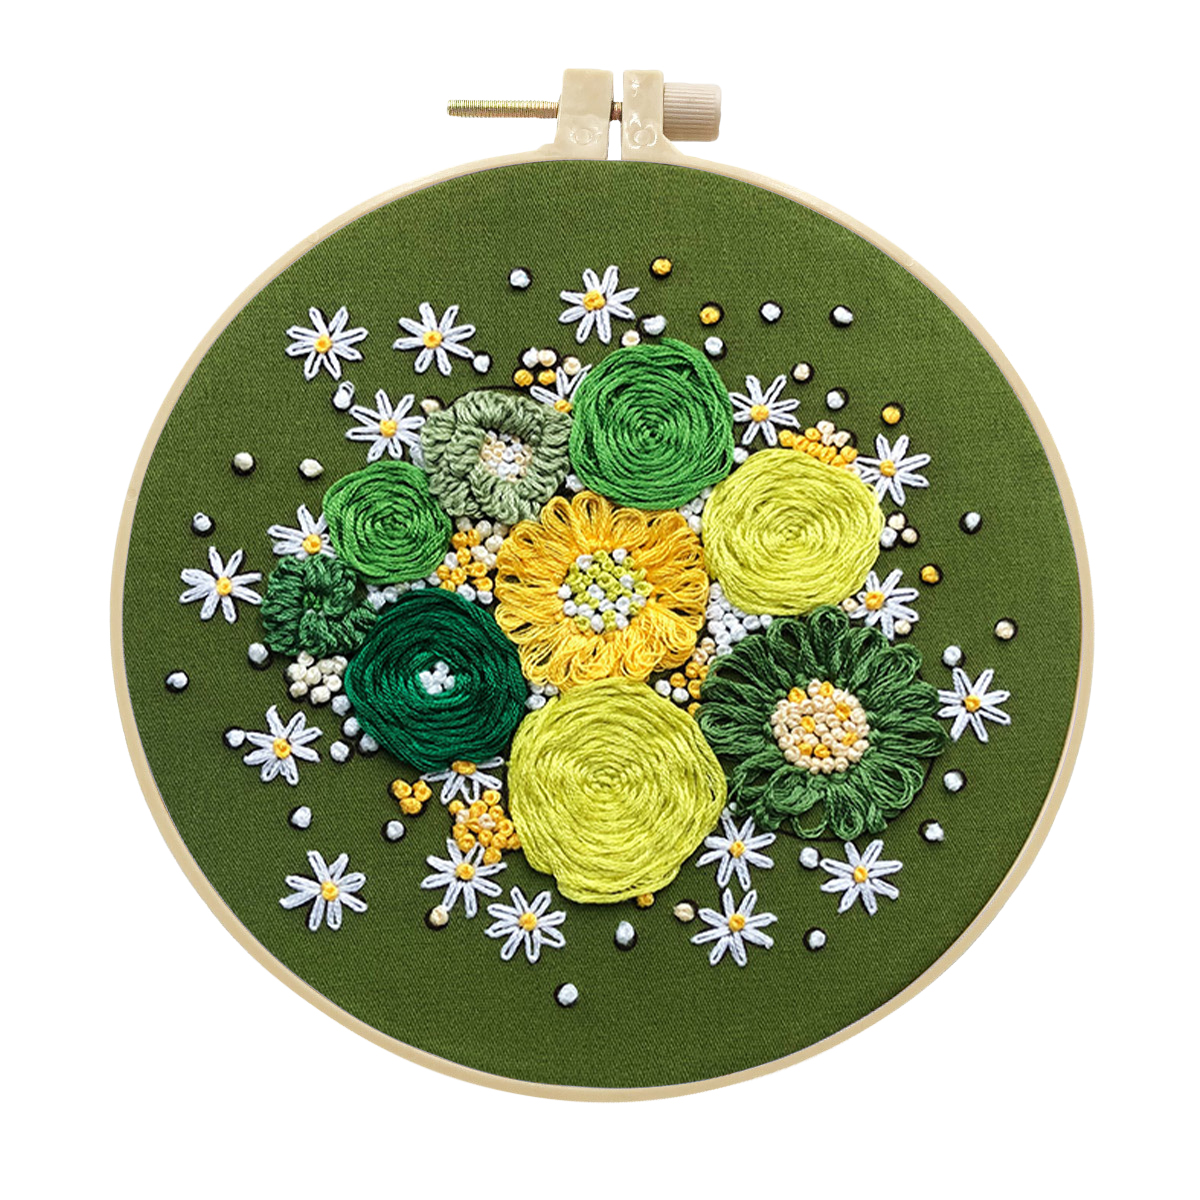 DIY Handmade Embroidery Kit Craft Cross Stitch Kits Beginner - Green Bouquet Pattern